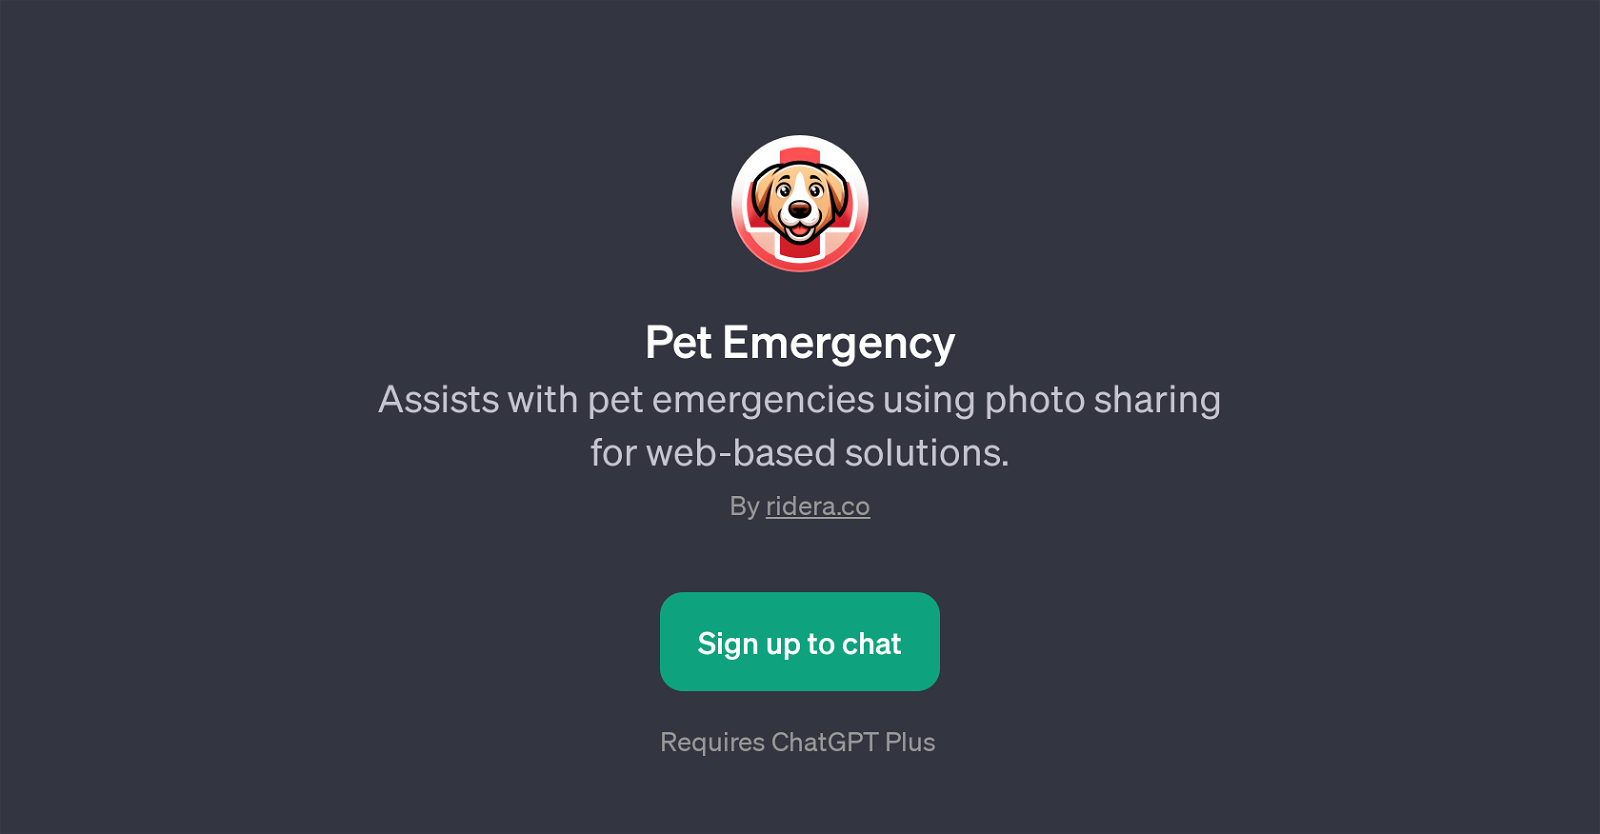 Pet Emergency website